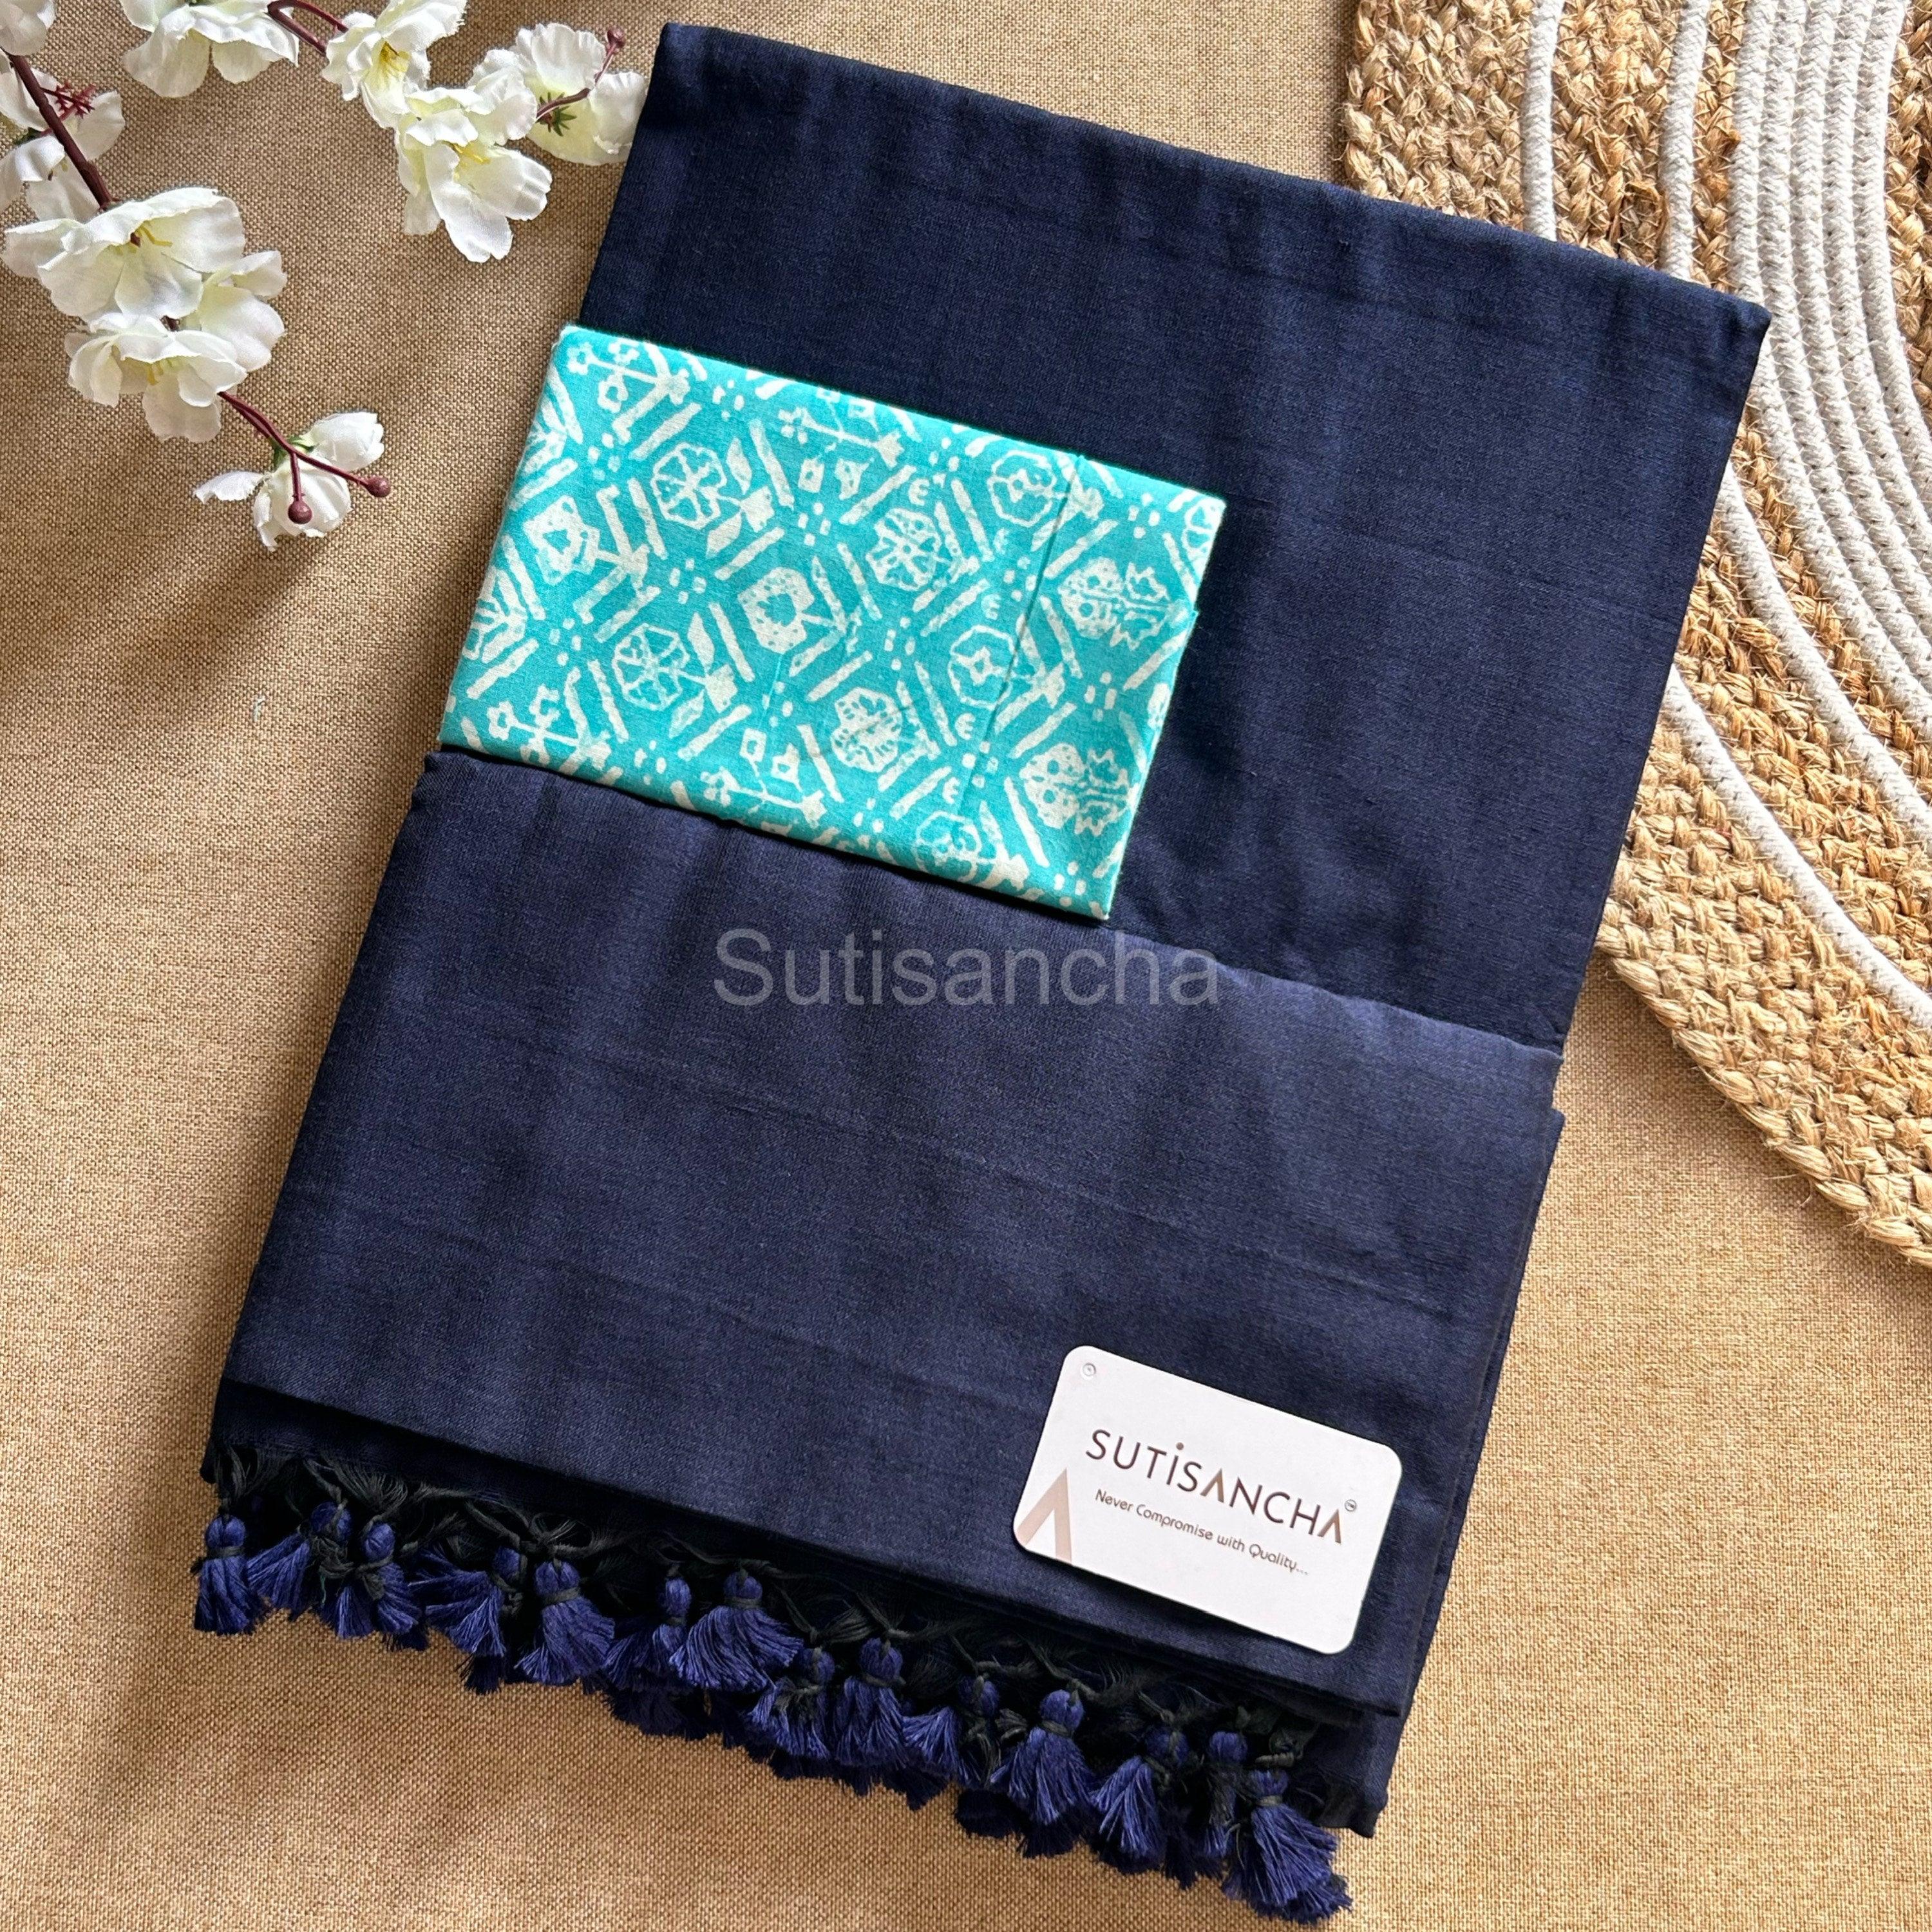 Sutisancha Navyblue Khadi Saree & Cotton Design Blouse - Suti Sancha